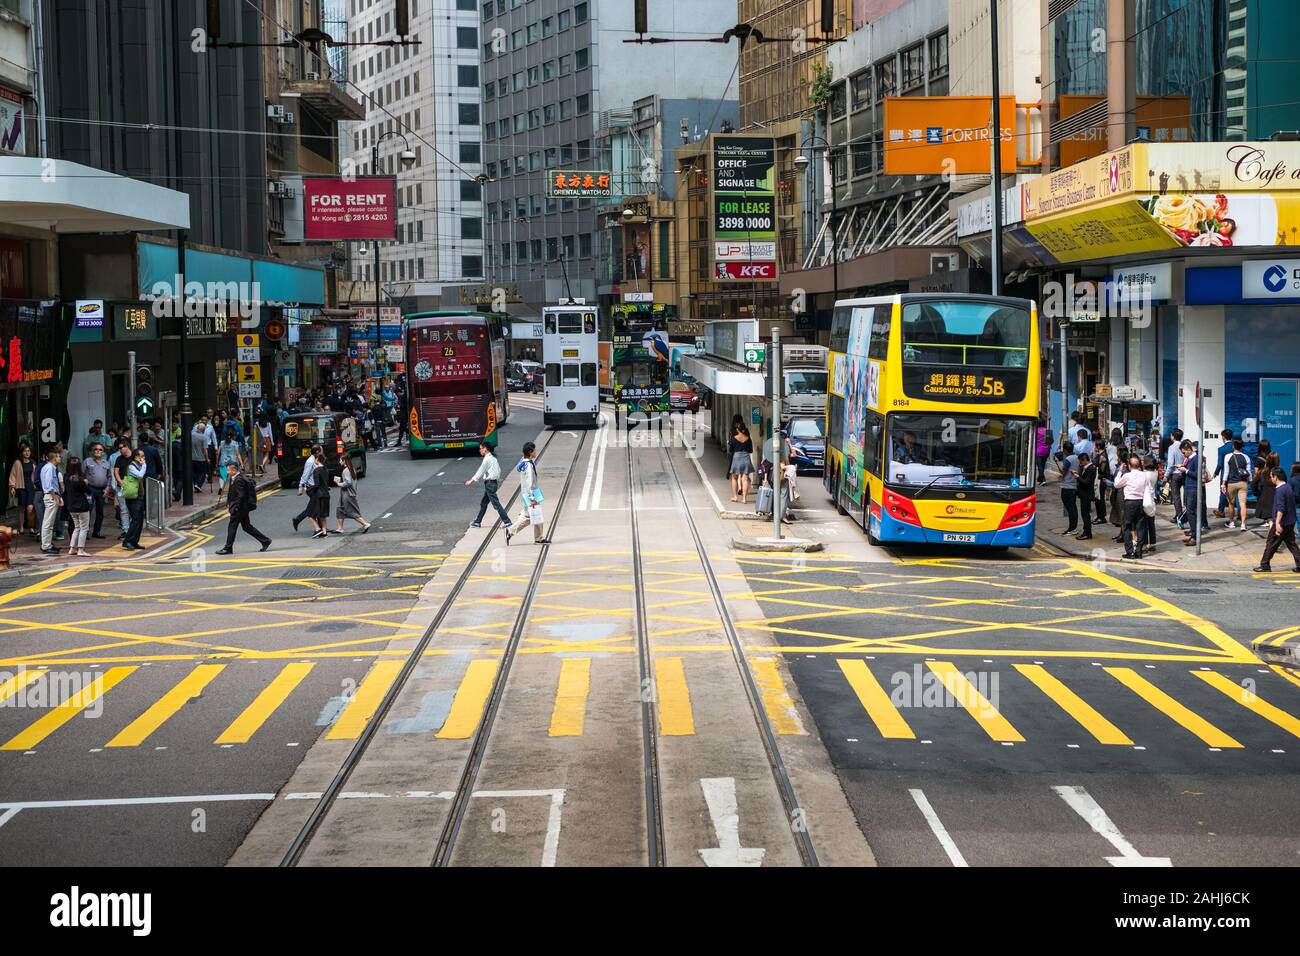 HongKong, November 2019: Street Scene, Fußgänger, Straßenbahn- und Busverkehr in Hong Kong City, Business District Stockfoto